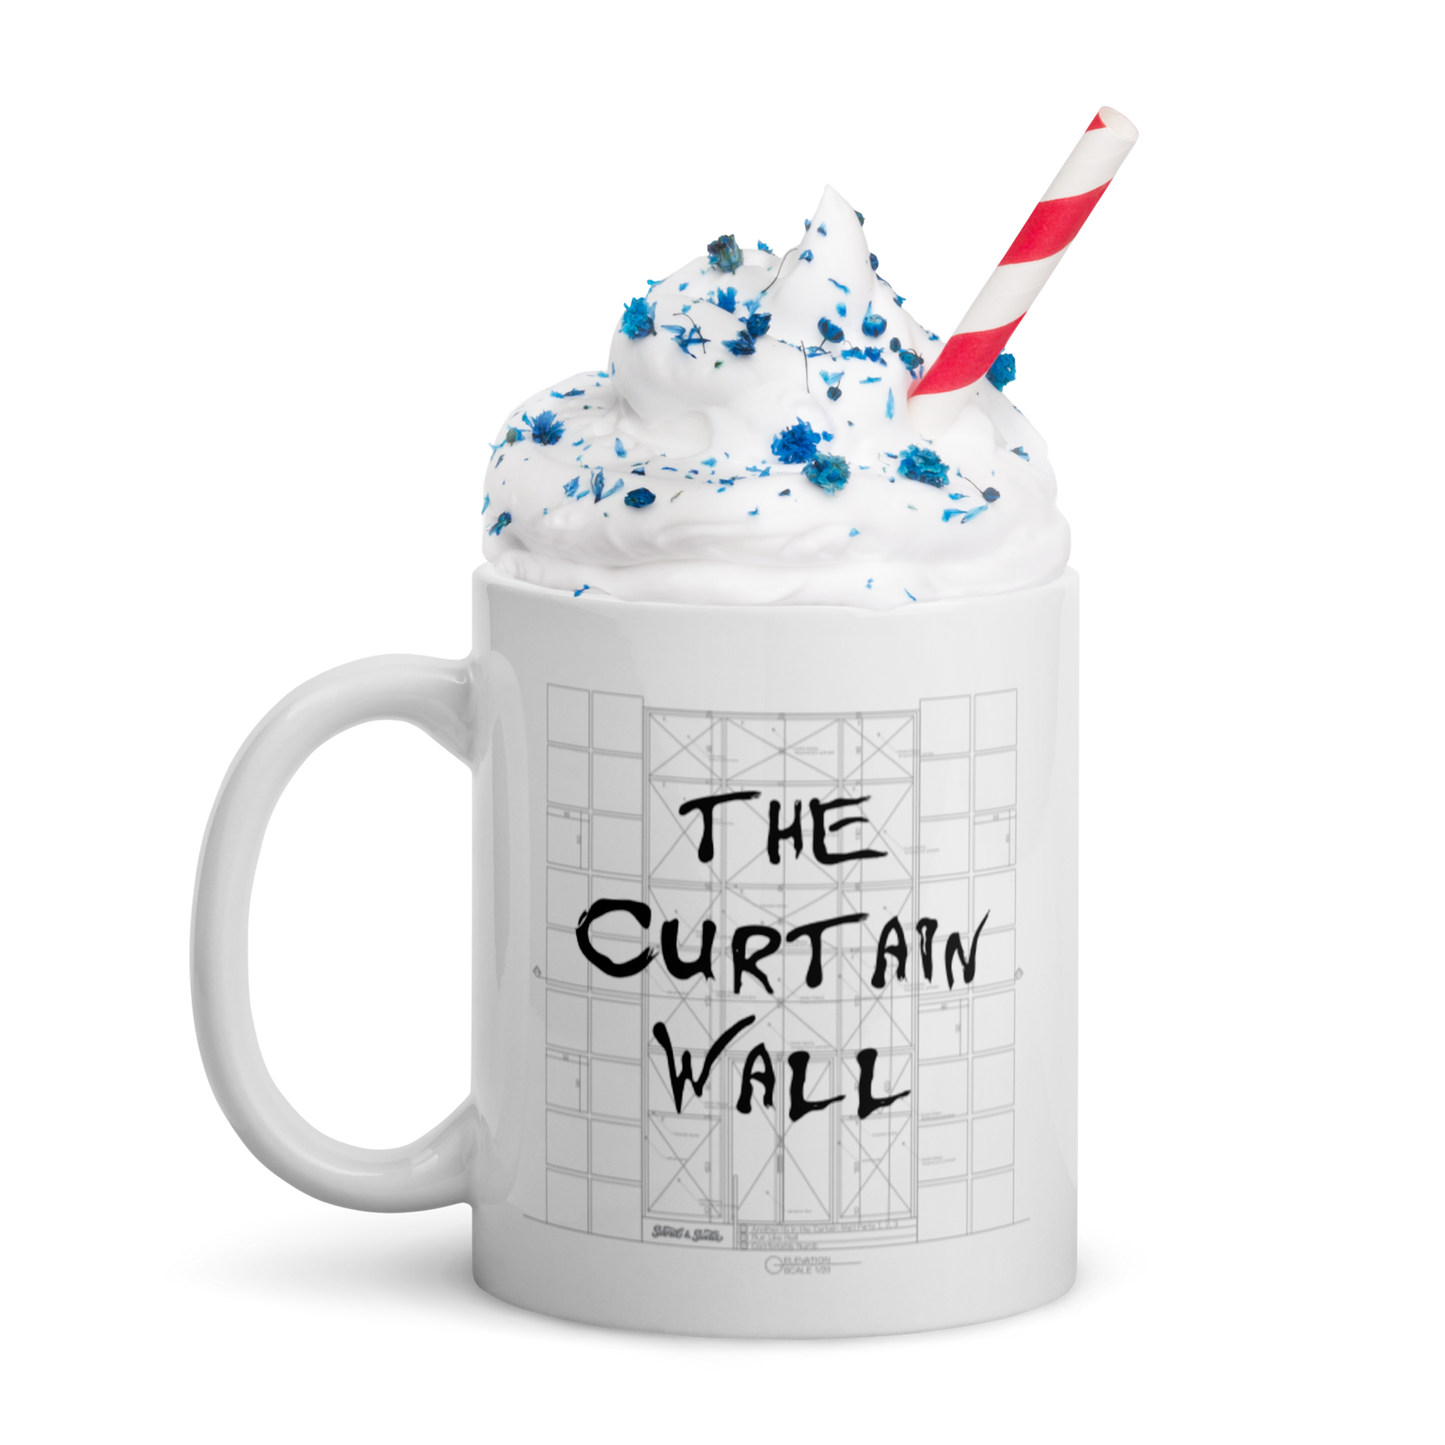 The Structural Wall/Curtain Wall Coffee Mug Combo